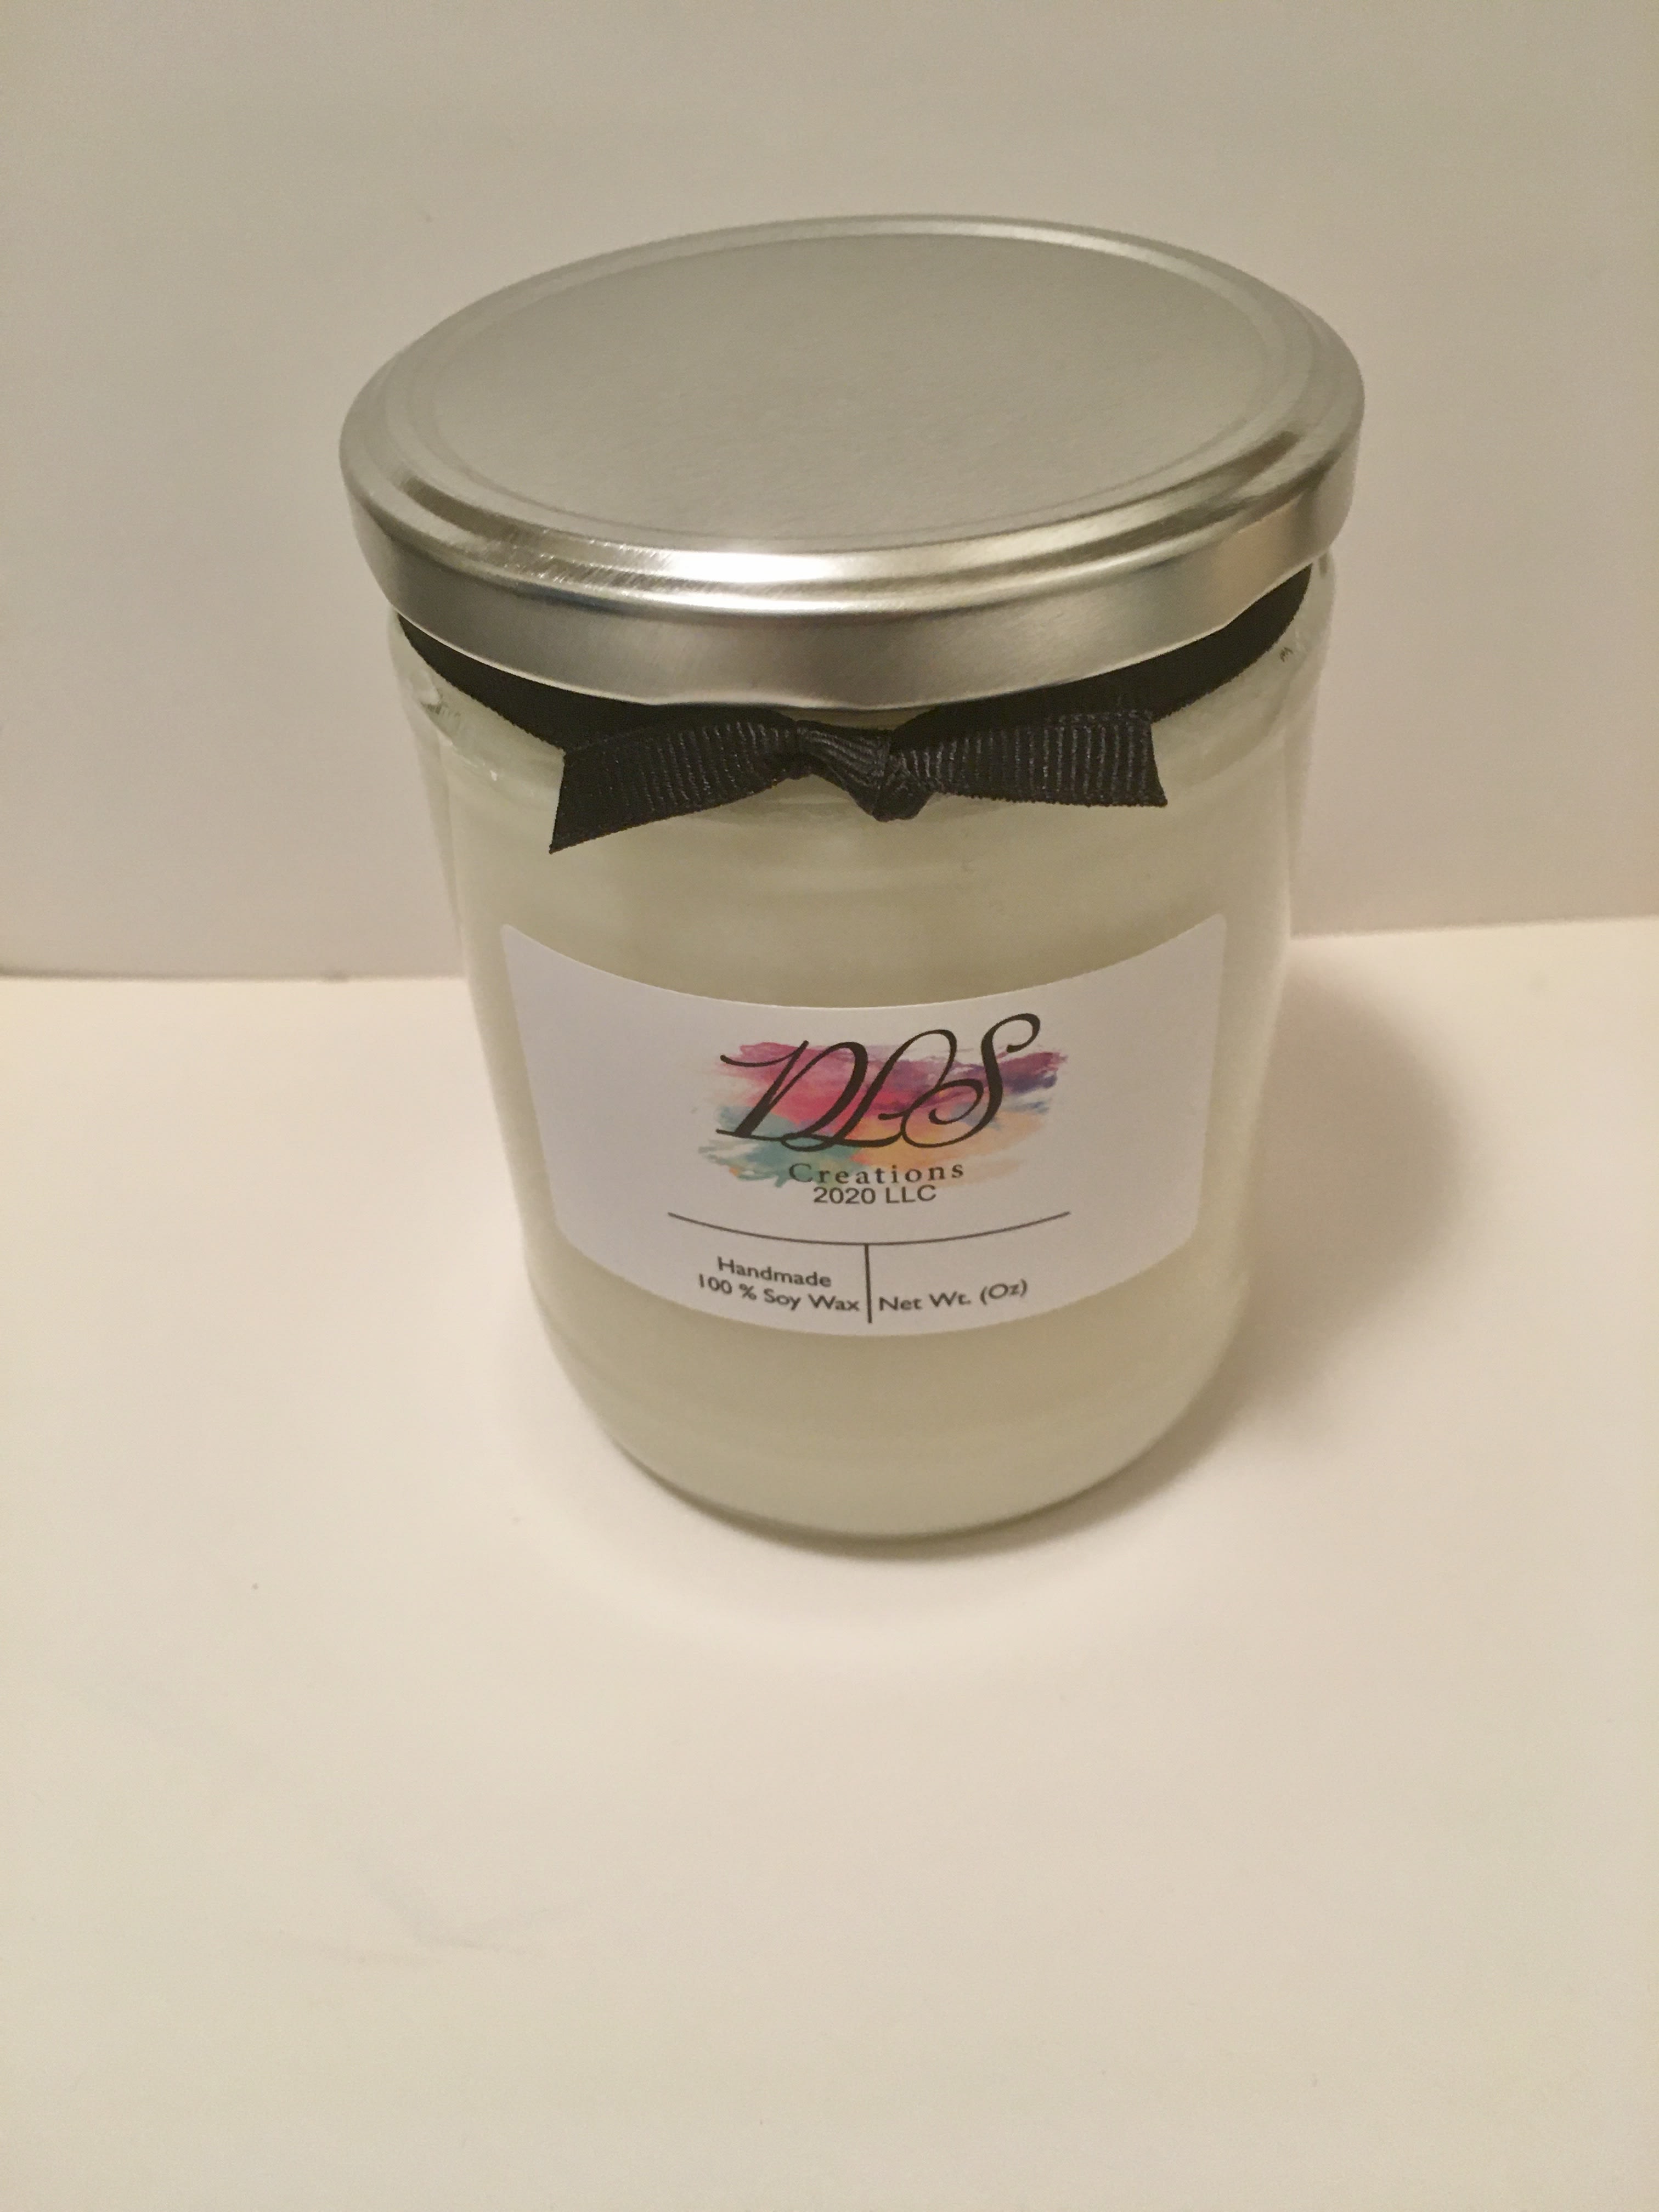 Blueberry Cobbler Para Soy Jar Candle & Wax Melts – BNR Acres